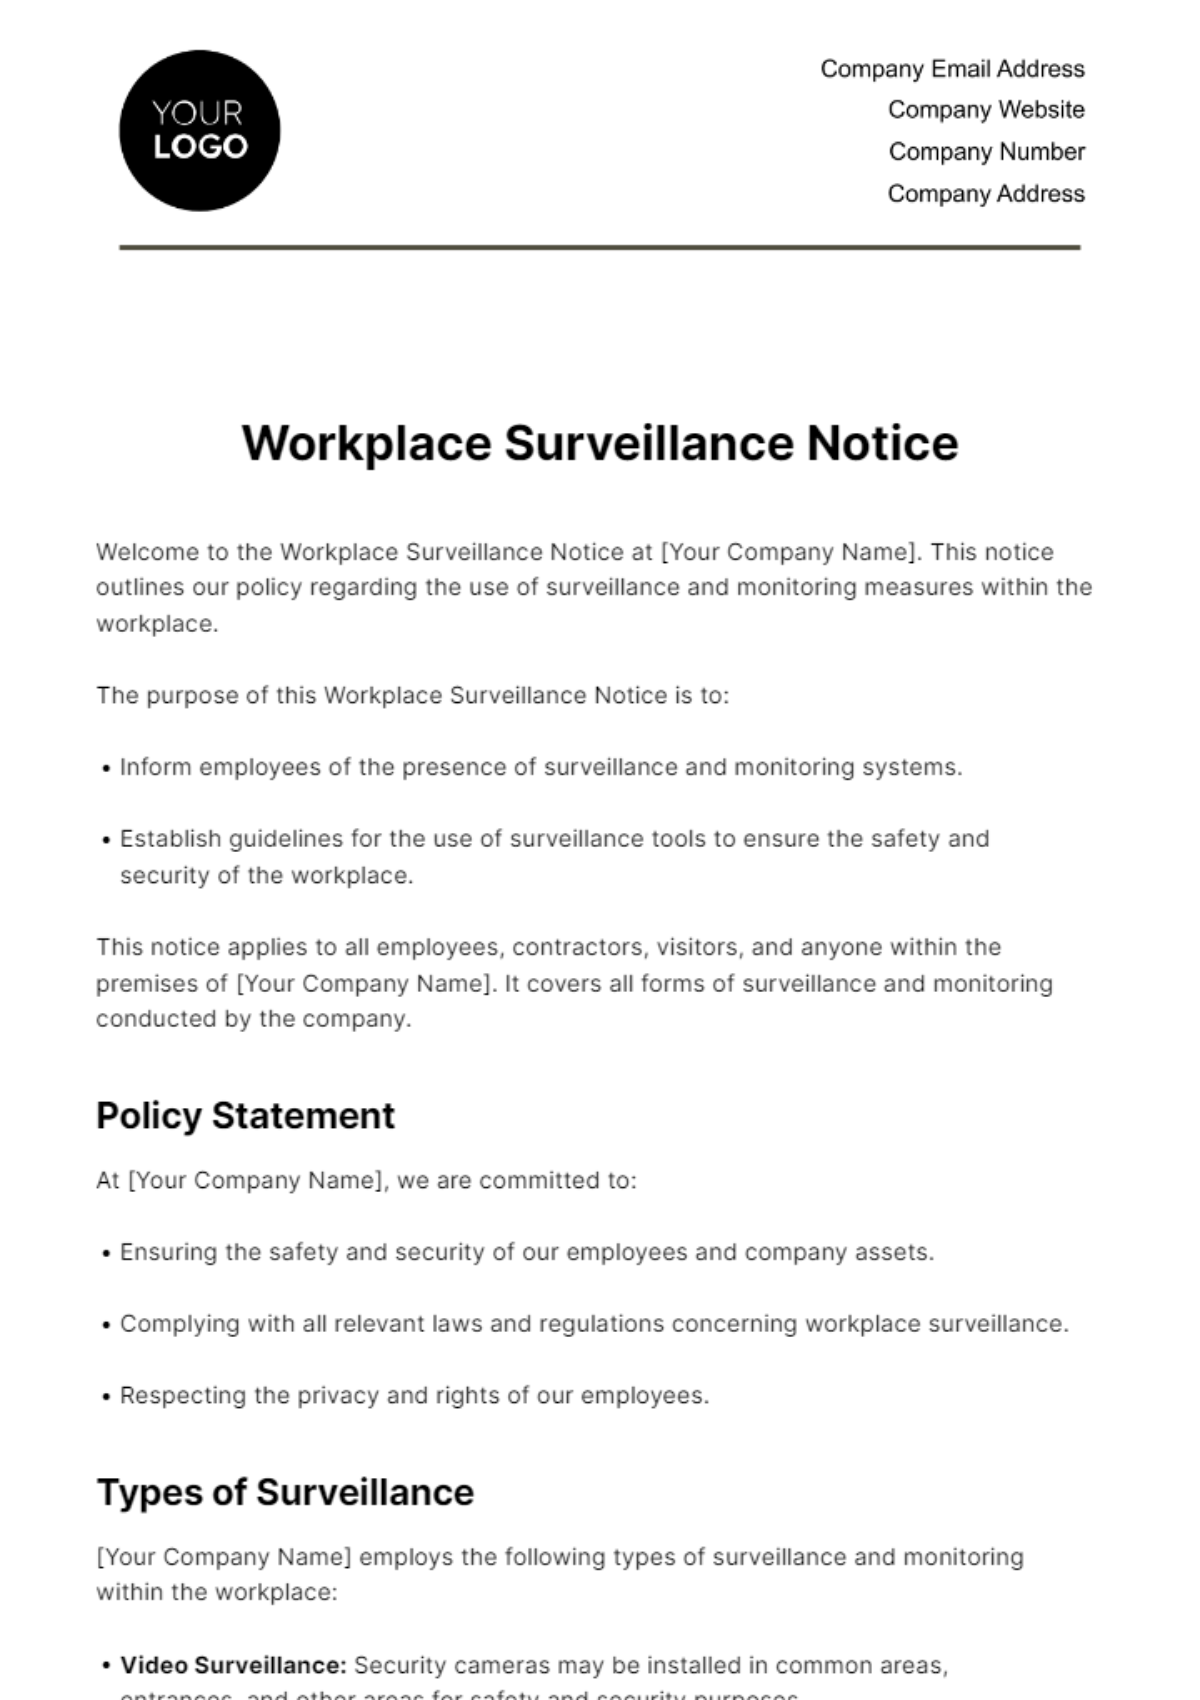 Workplace Surveillance Notice HR Template